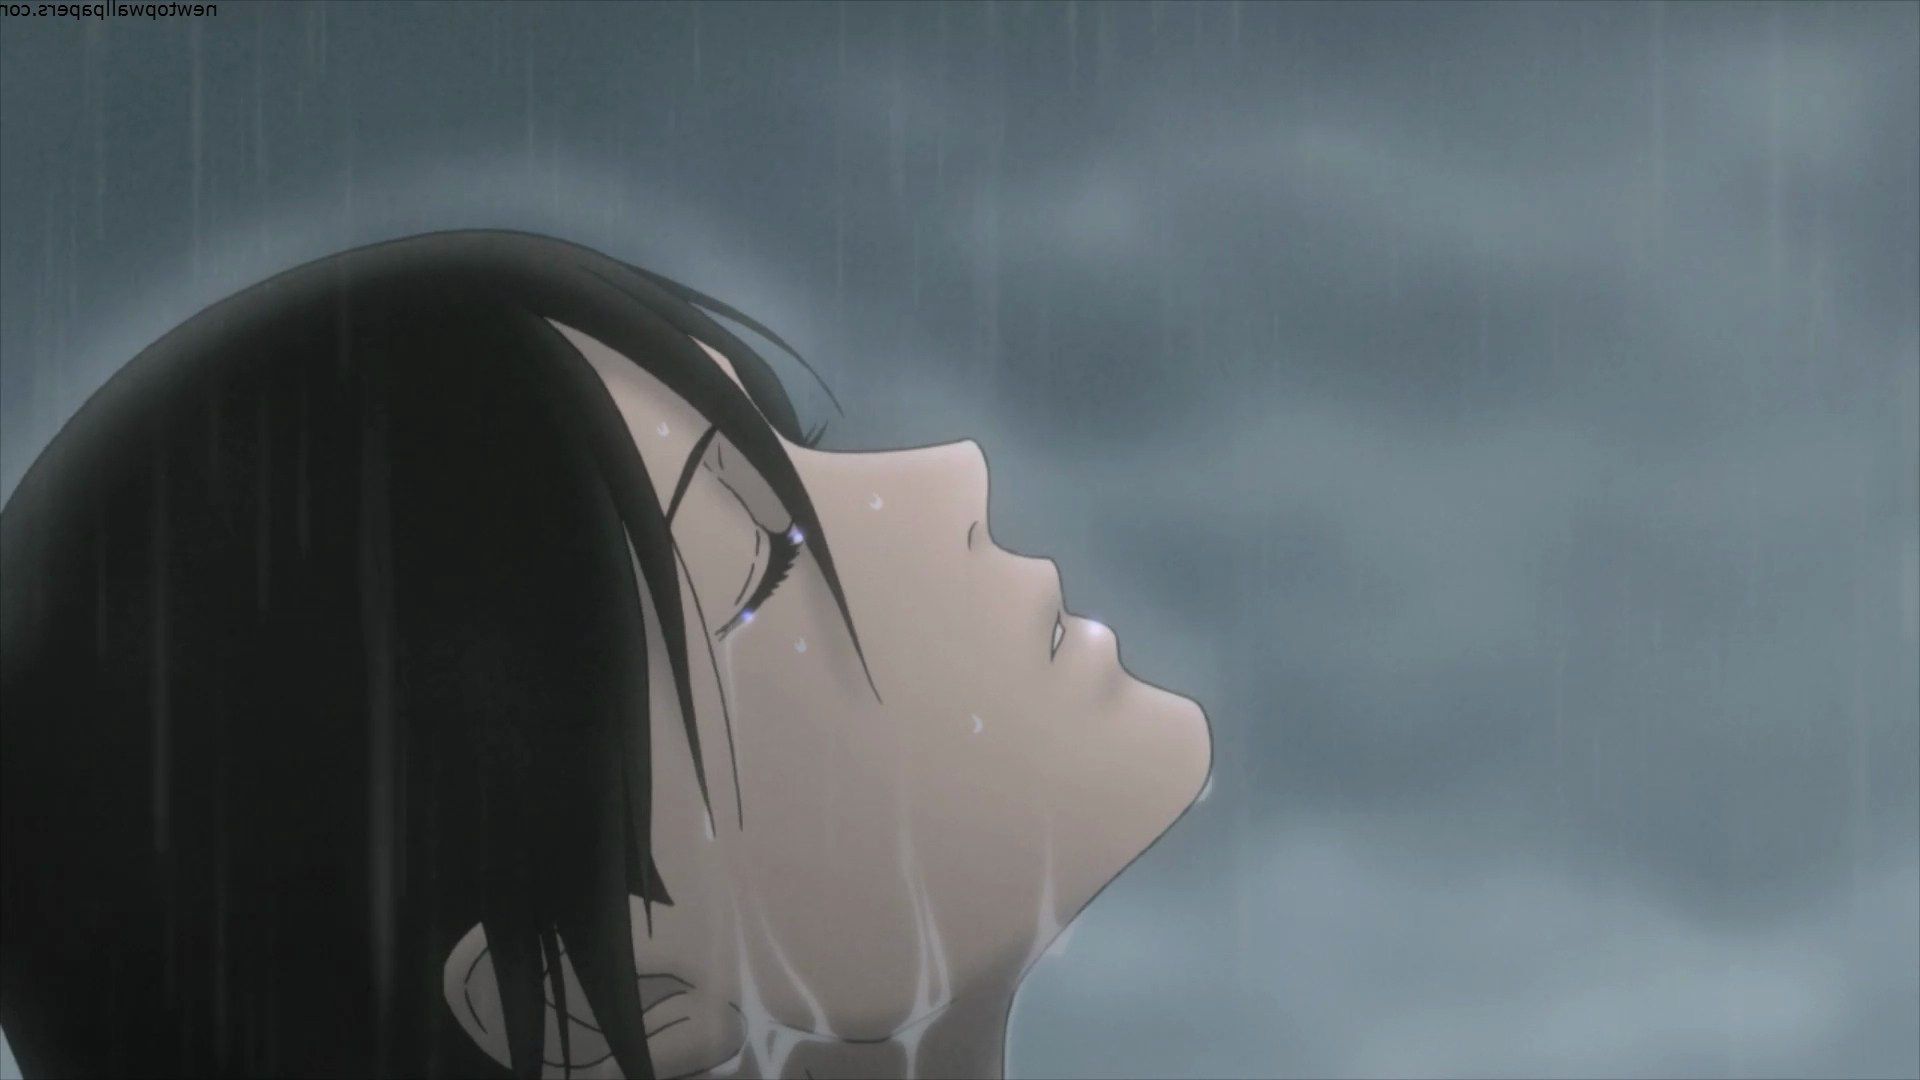 Anime Boy Crying